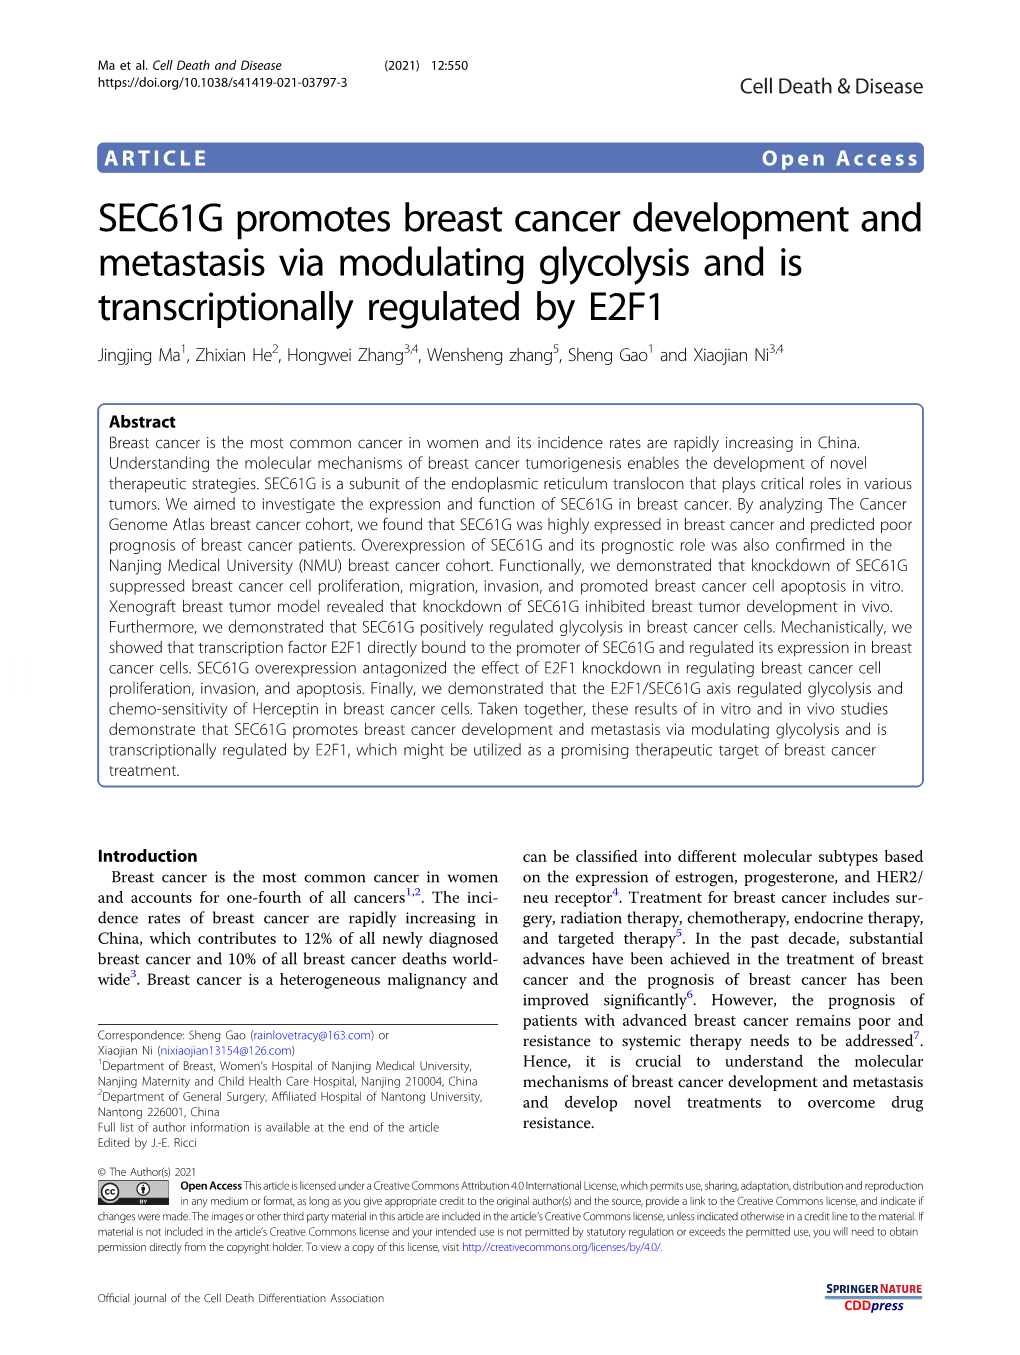 SEC61G Promotes Breast Cancer Development and Metastasis Via